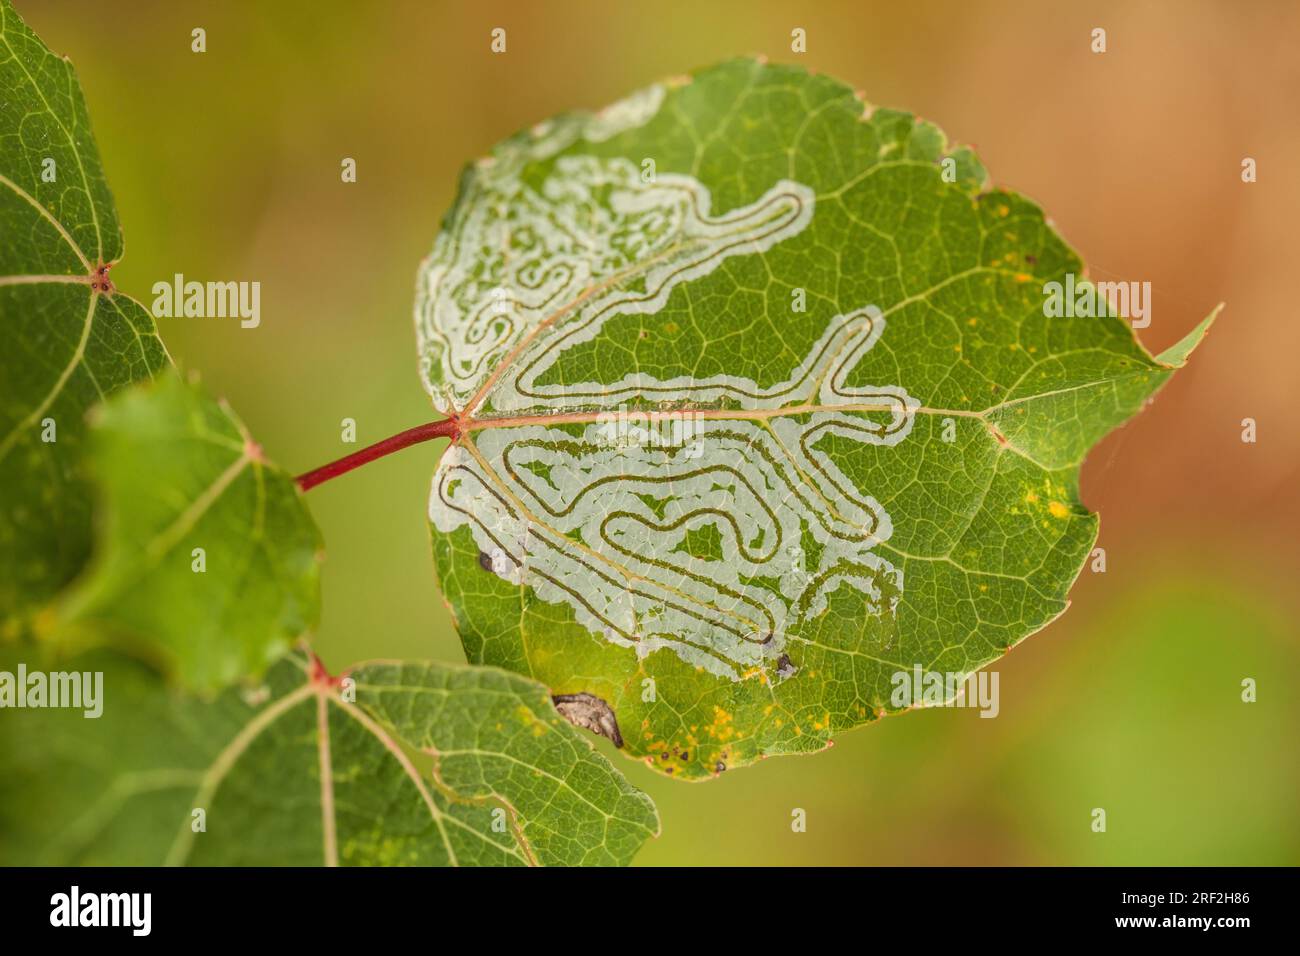 eaf miner (Phyllocnistis labyrinthella), leaf mines in the leaves of common aspen, Populus tremula, Germany Stock Photo